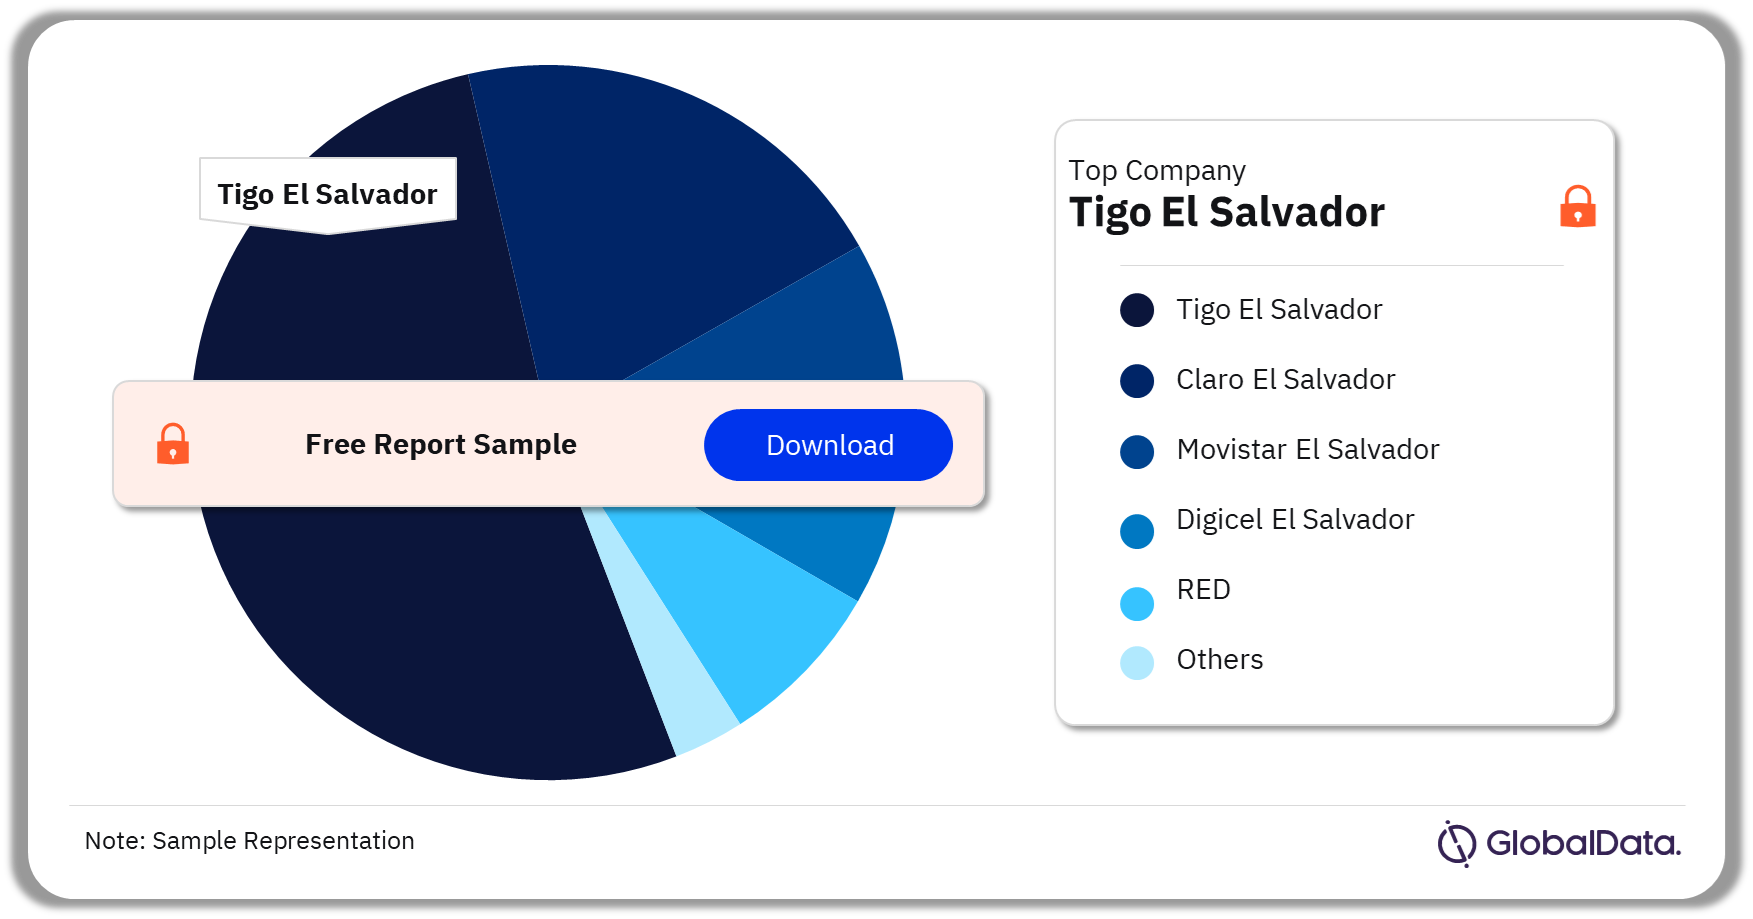 El Salvador Telecom Services Market Share by Companies, 2022 (%)